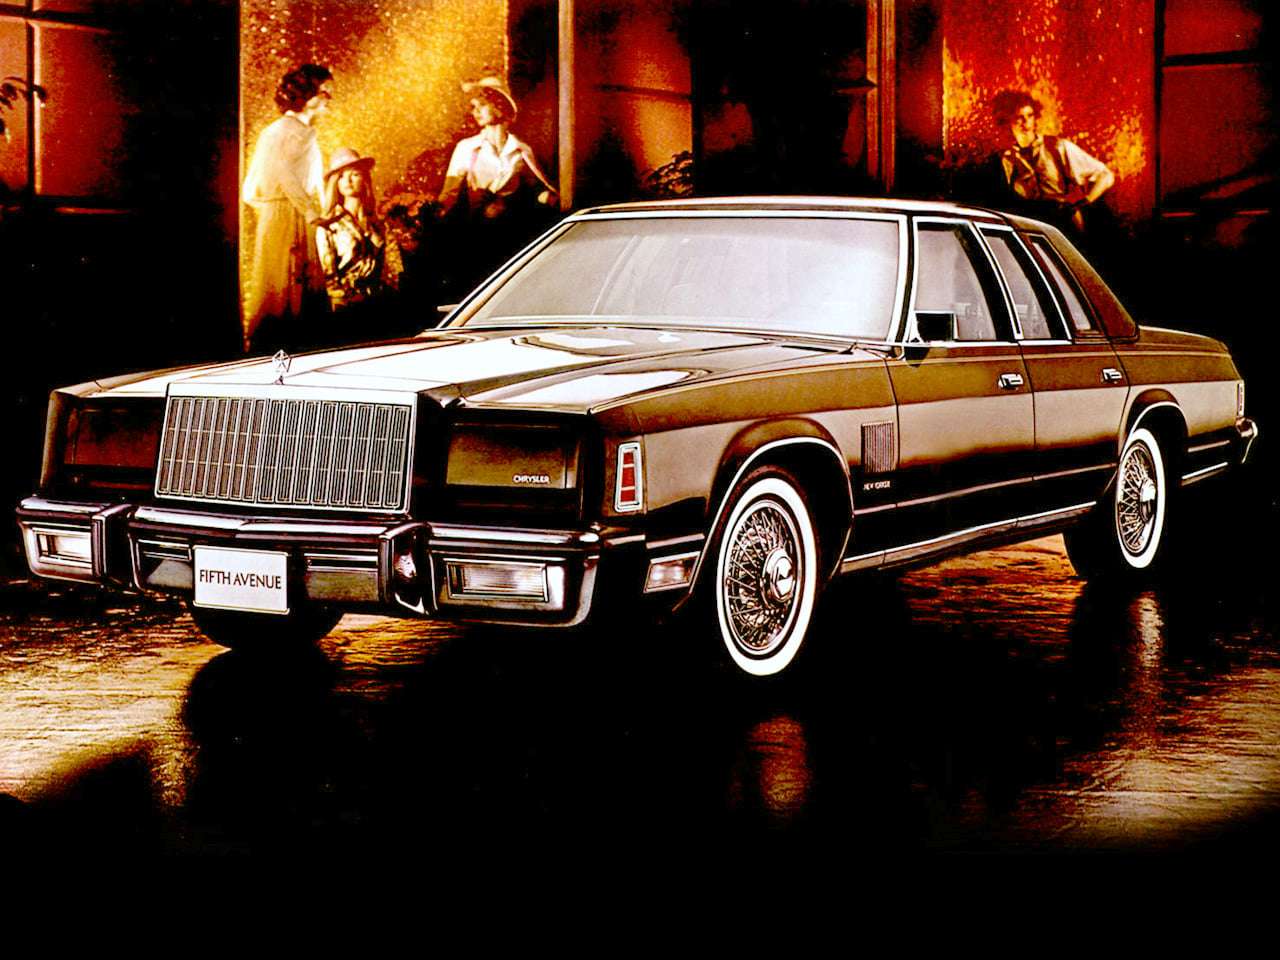 1980 Chrysler New Yorker Fifth Avenue pussel på nätet